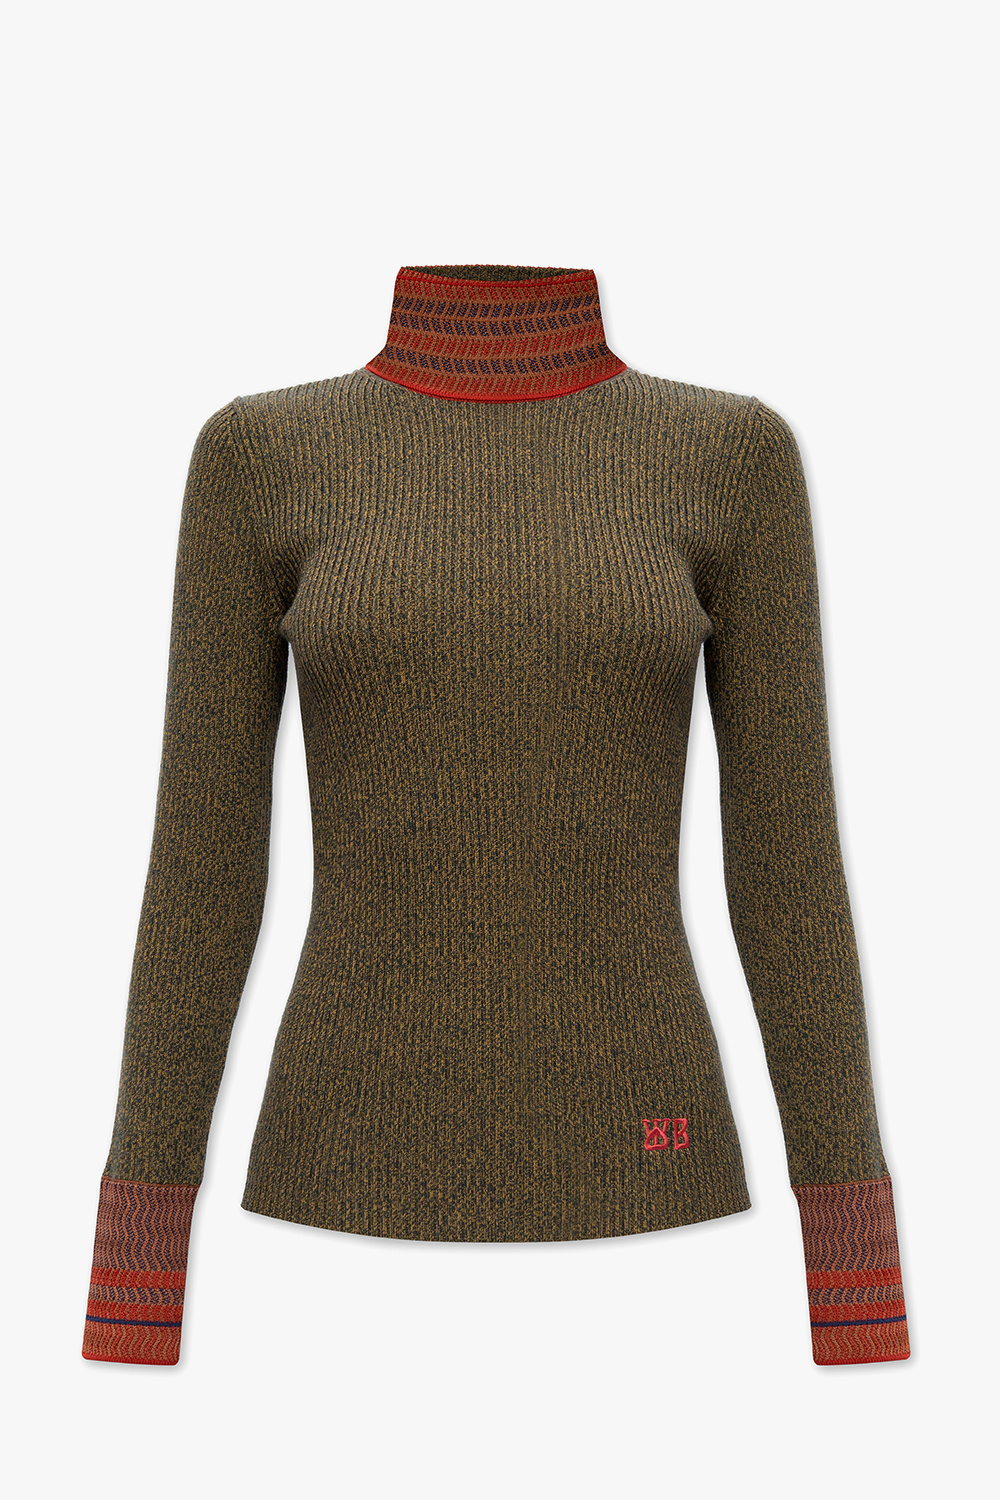 SchaferandweinerShops Malawi - Green 'Fusion' turtleneck sweater Wales  Bonner - T-Shirt AMARO Gola V Com Entremeio Li Rosa